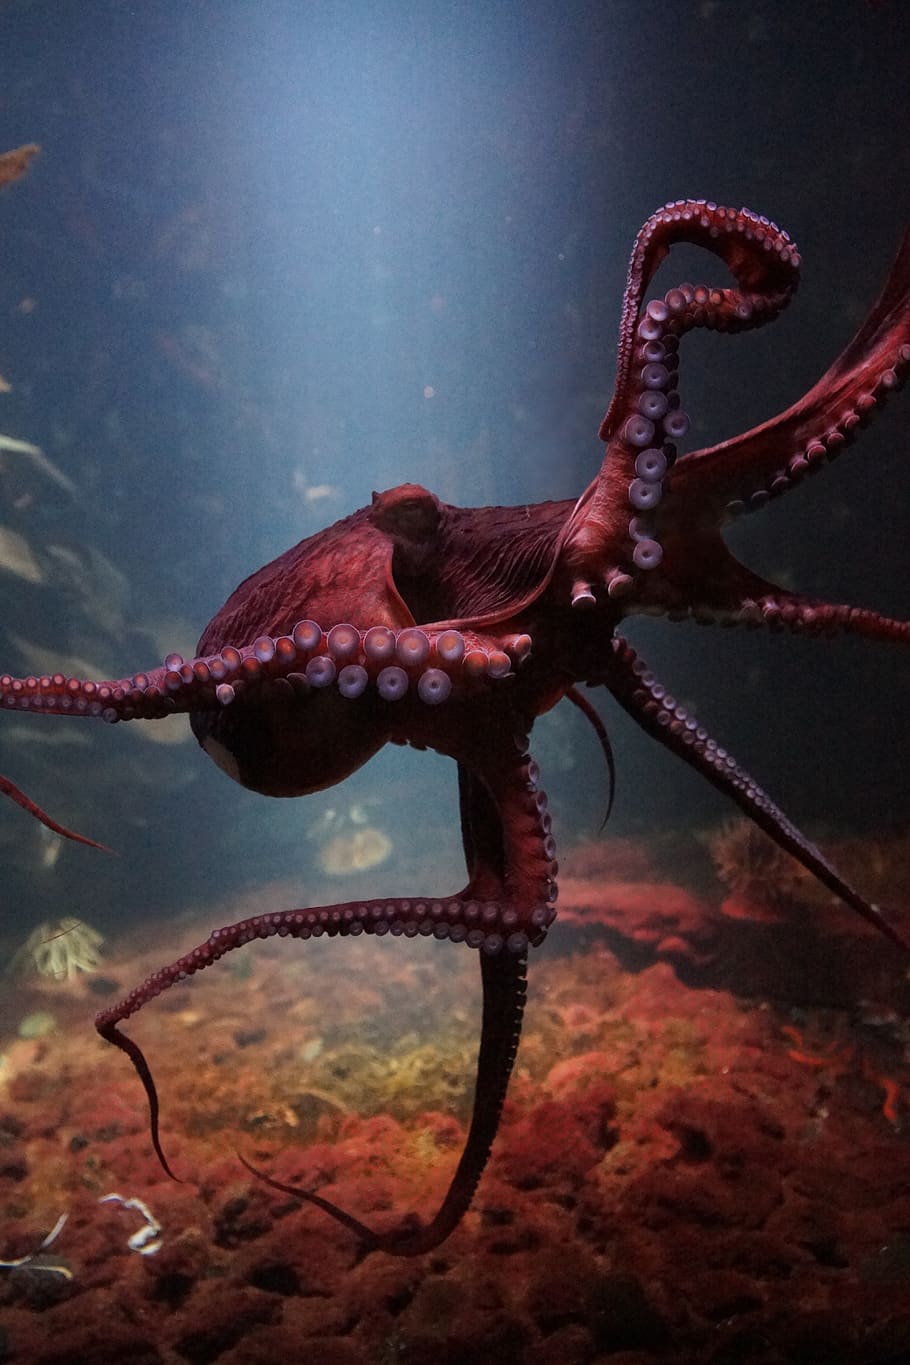 octopus, sea life underwater, ocean, fauna, invertebrate, biology